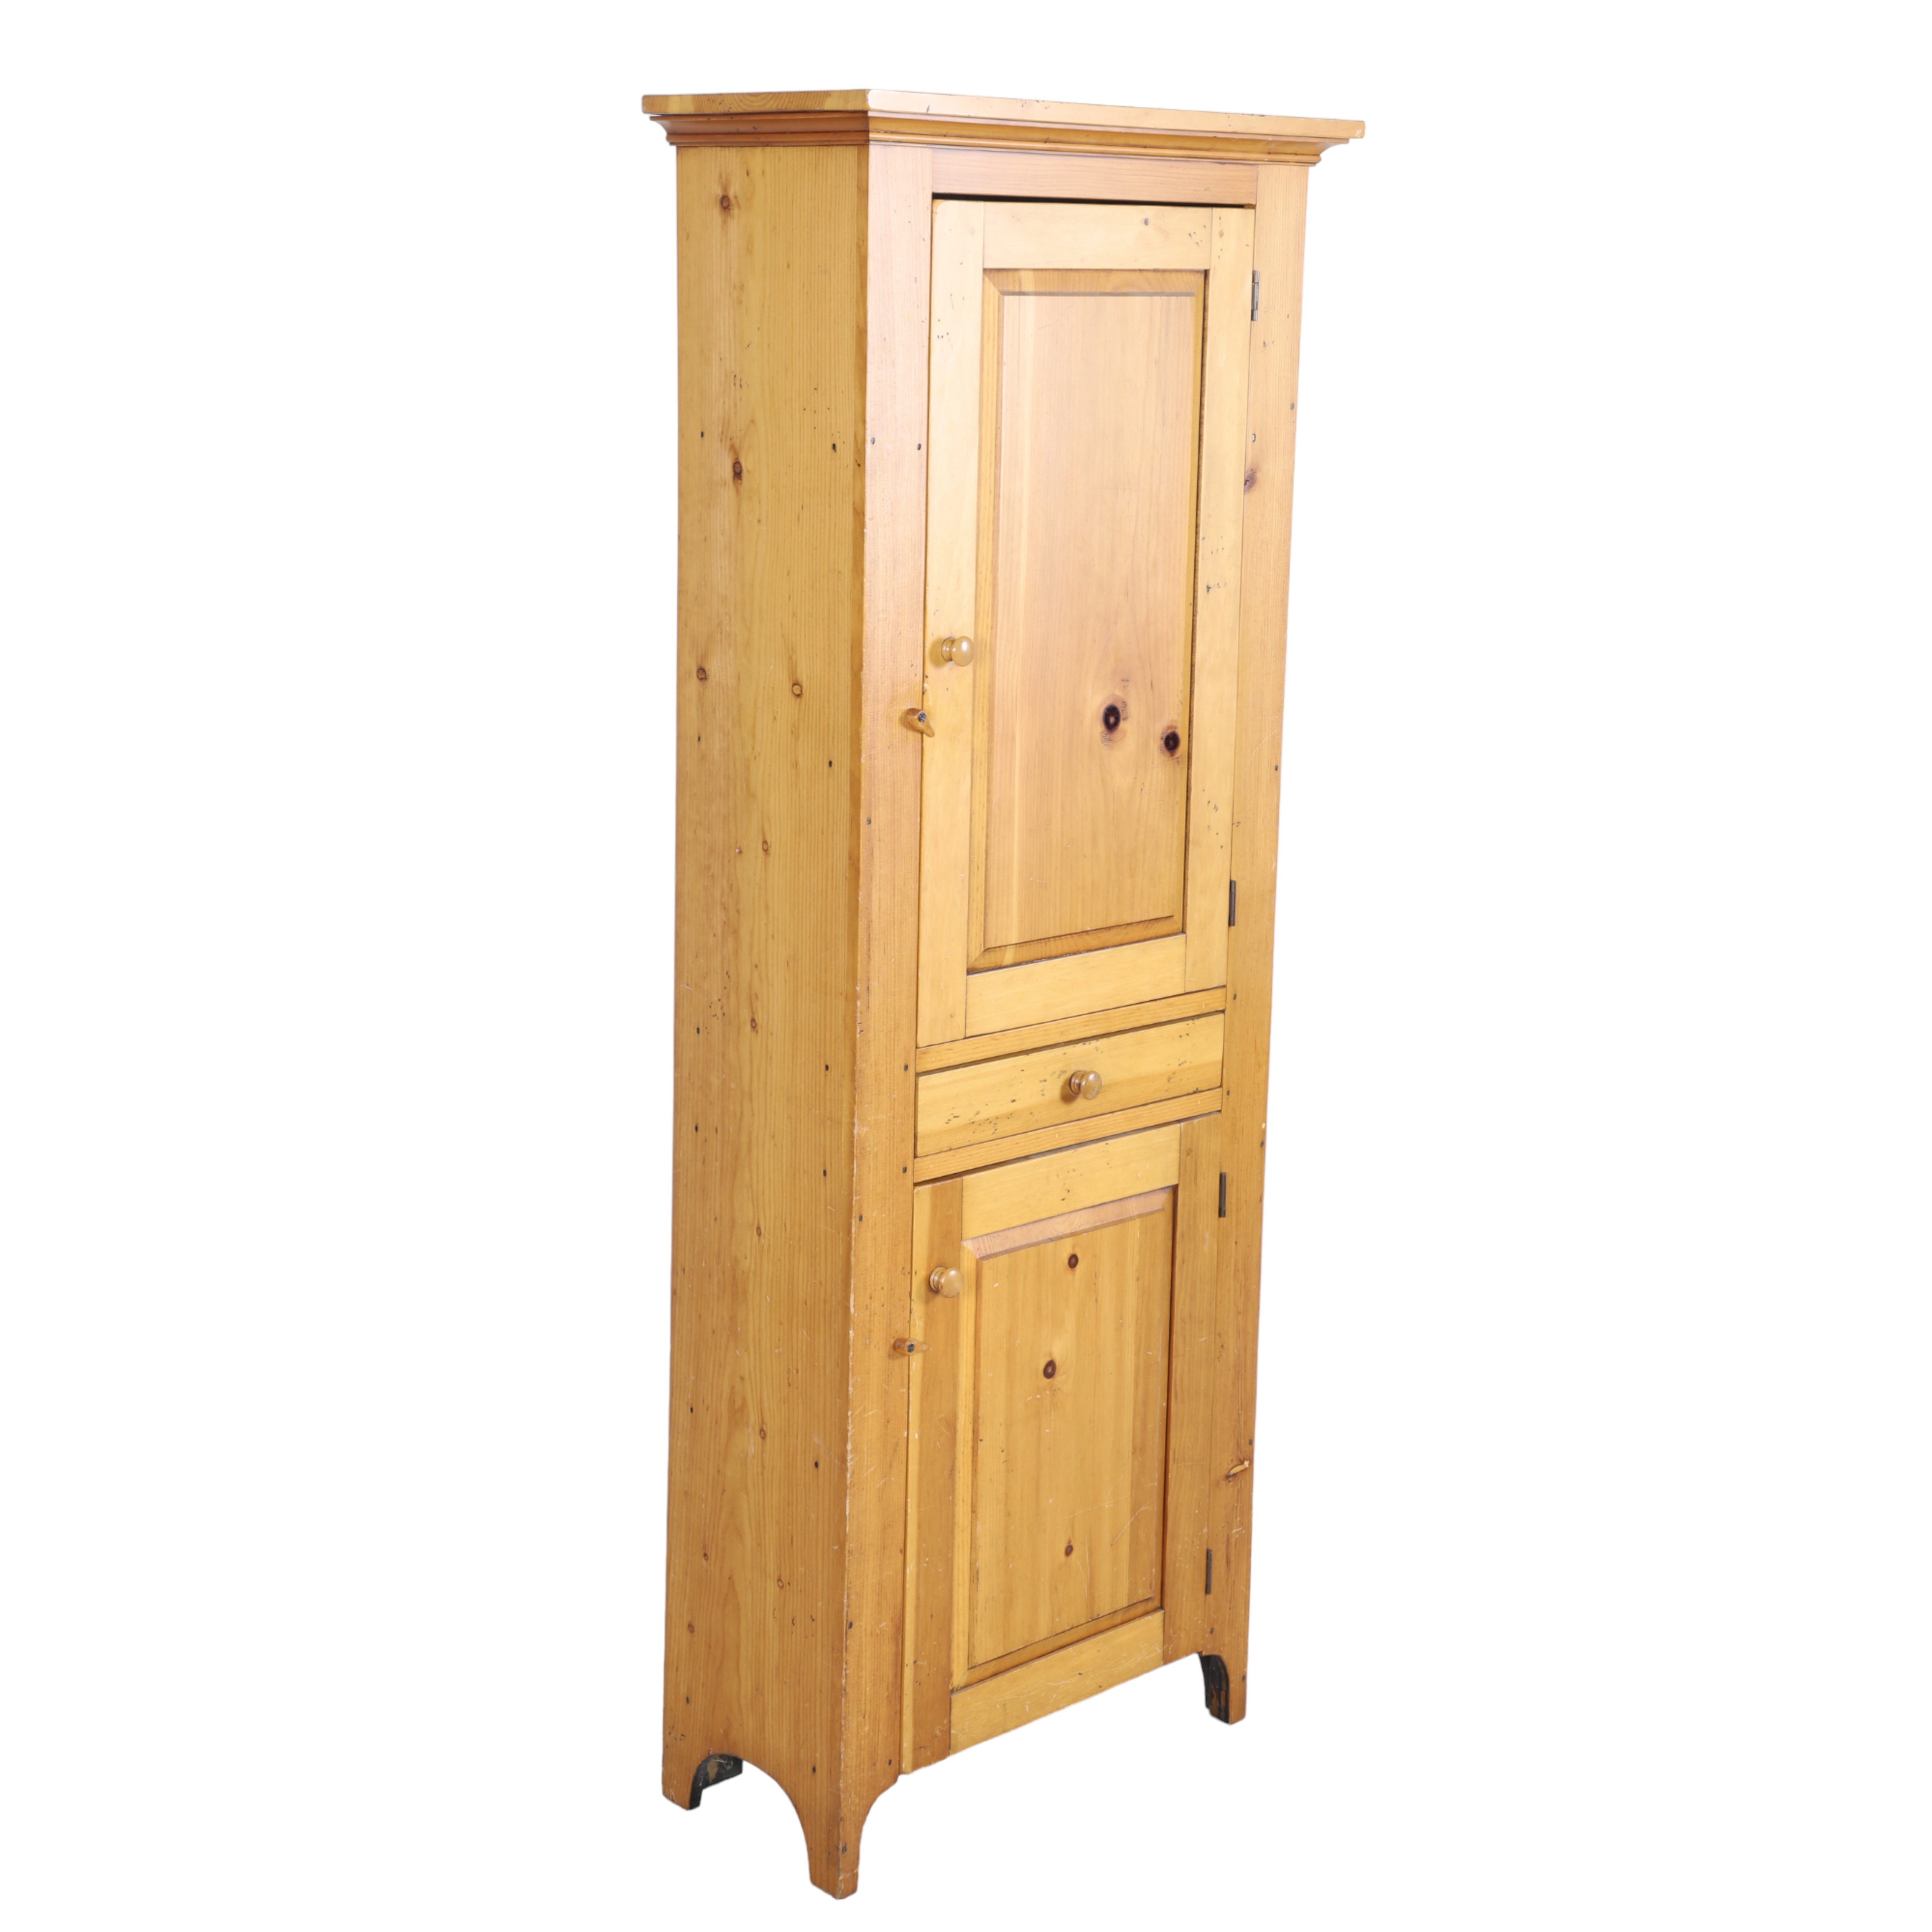 Pine paneled cupboard top with 3ca7b3